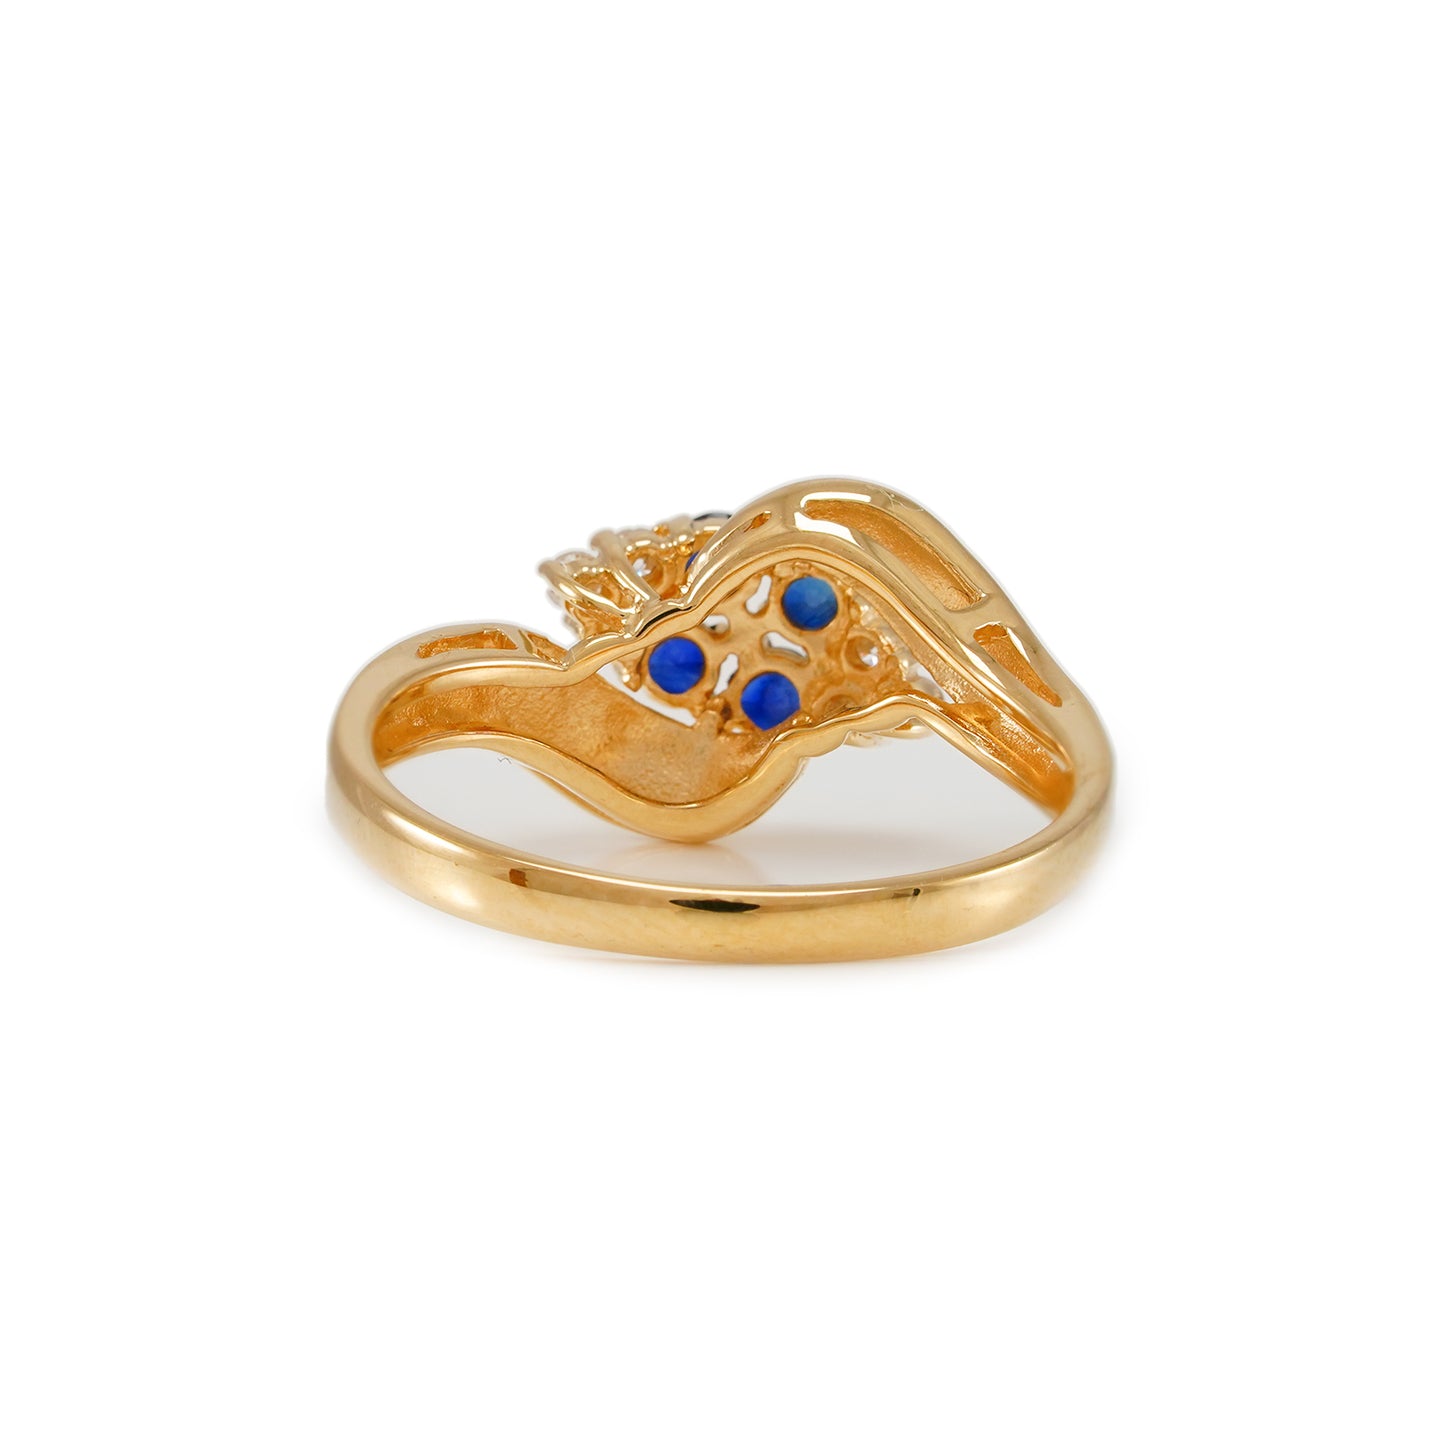 Gold ring diamond gemstone ring sapphire yellow gold 14K gold 585 women's ring women's jewelry